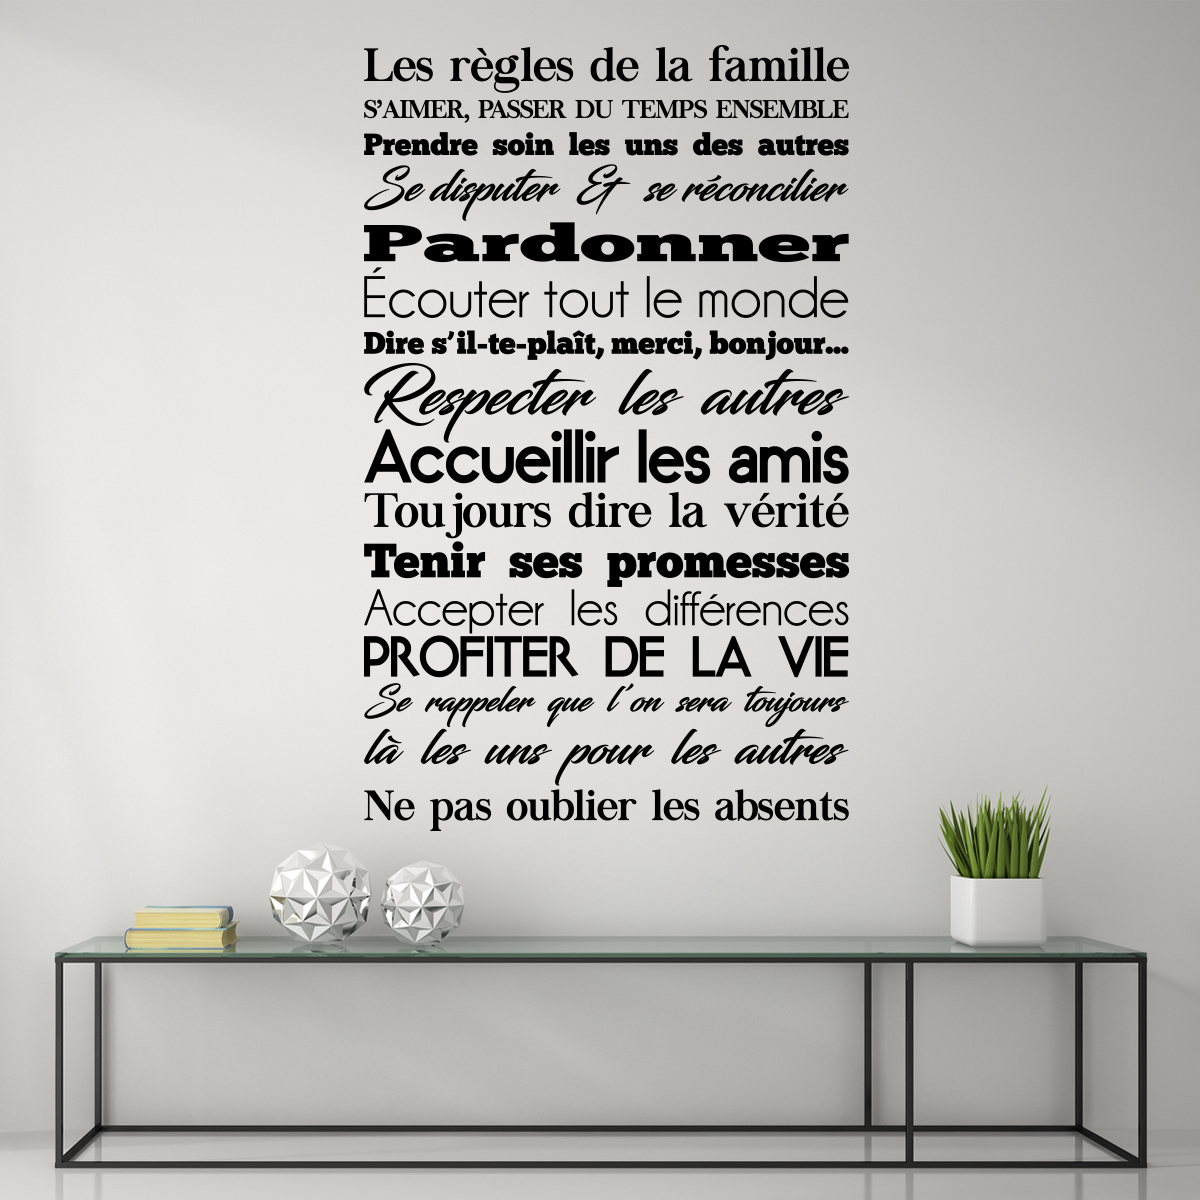 Sticker mural Règles de la Famille : Chez Rentreediscount Ma jolie